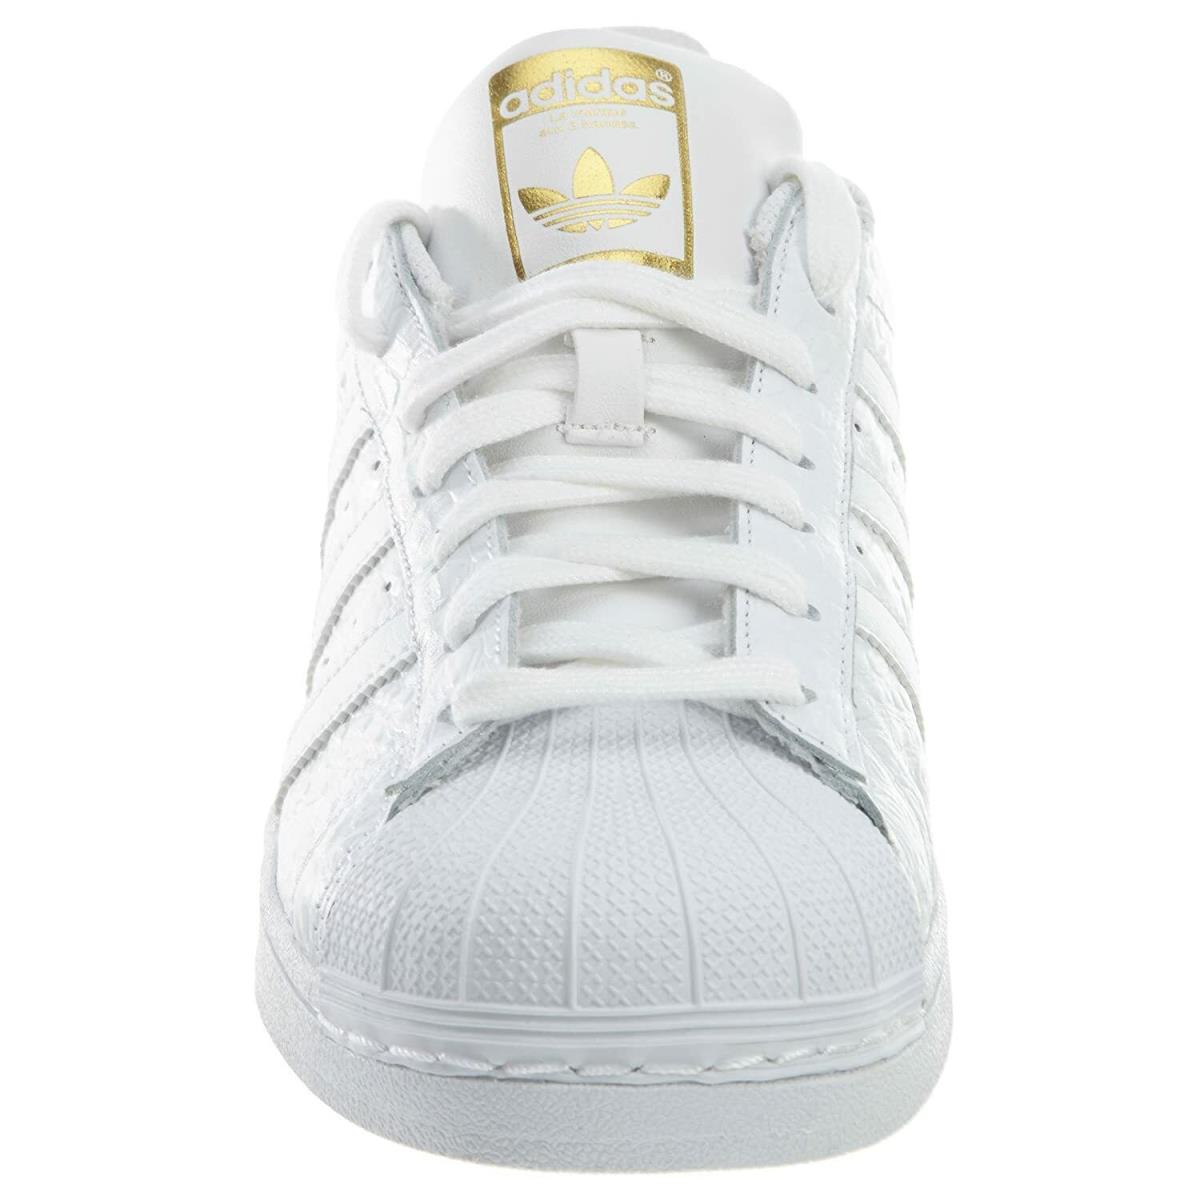 Adidas shoes Originals Superstar Croc - White 3